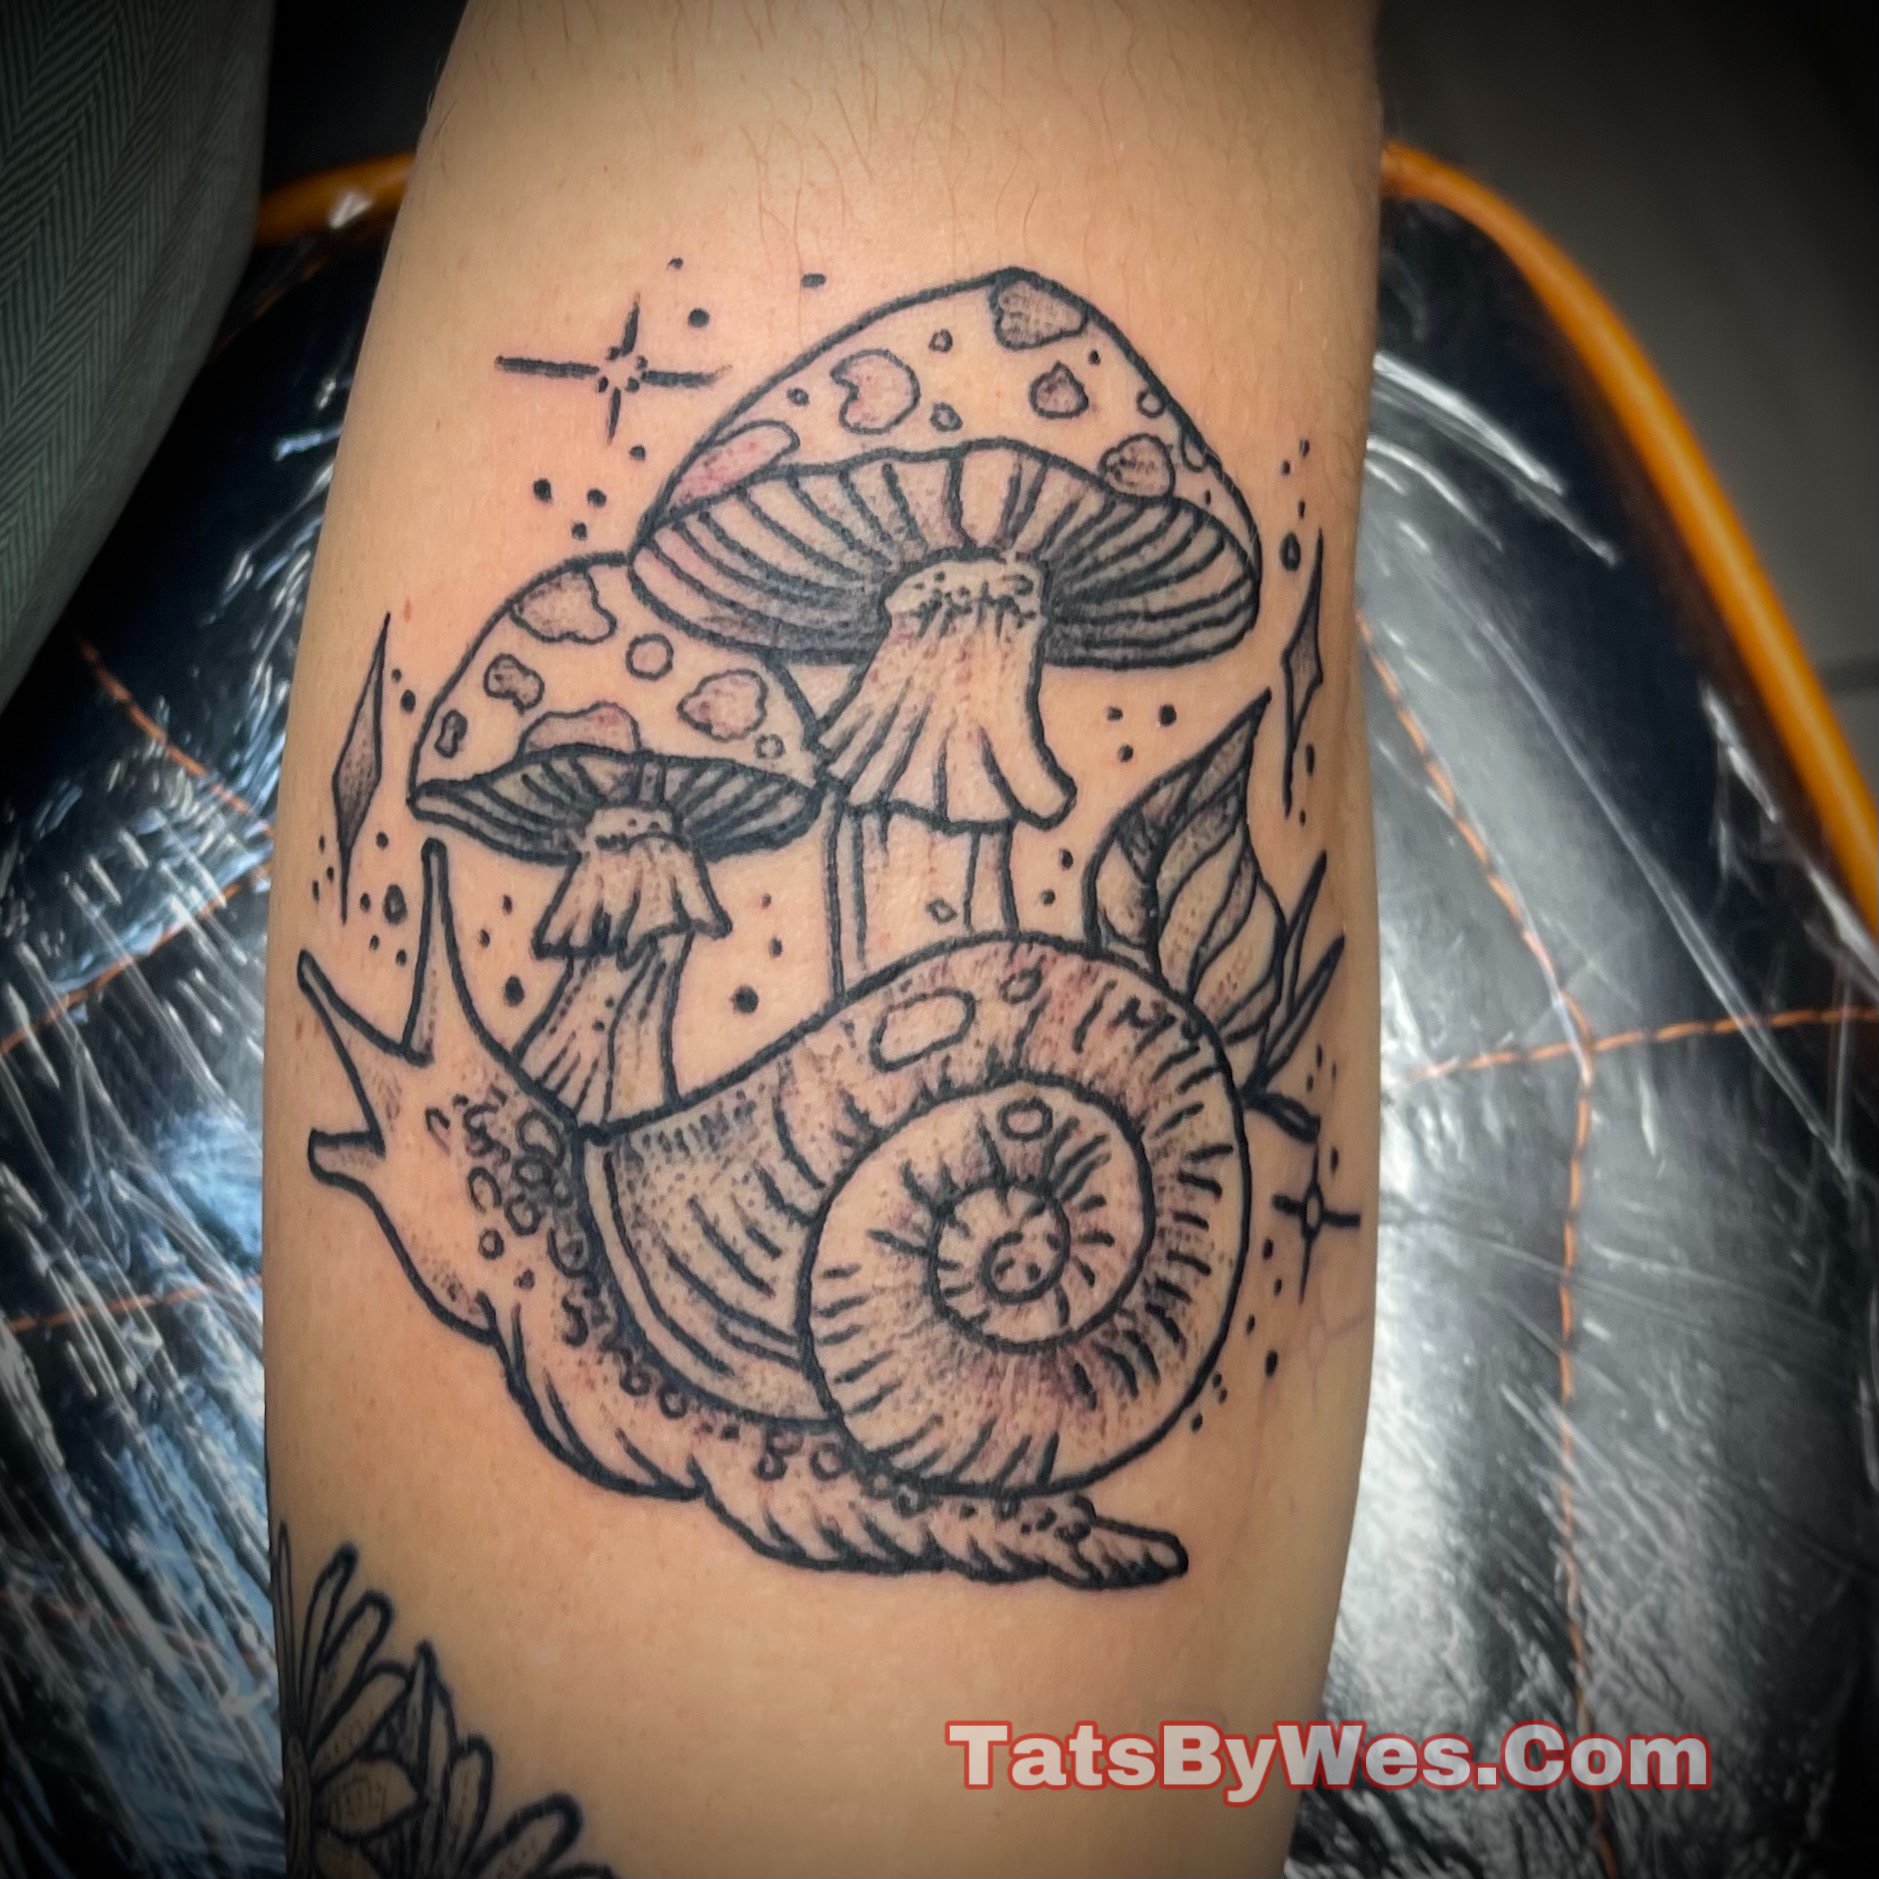 Tattoos for Women - Snails and Mushroom